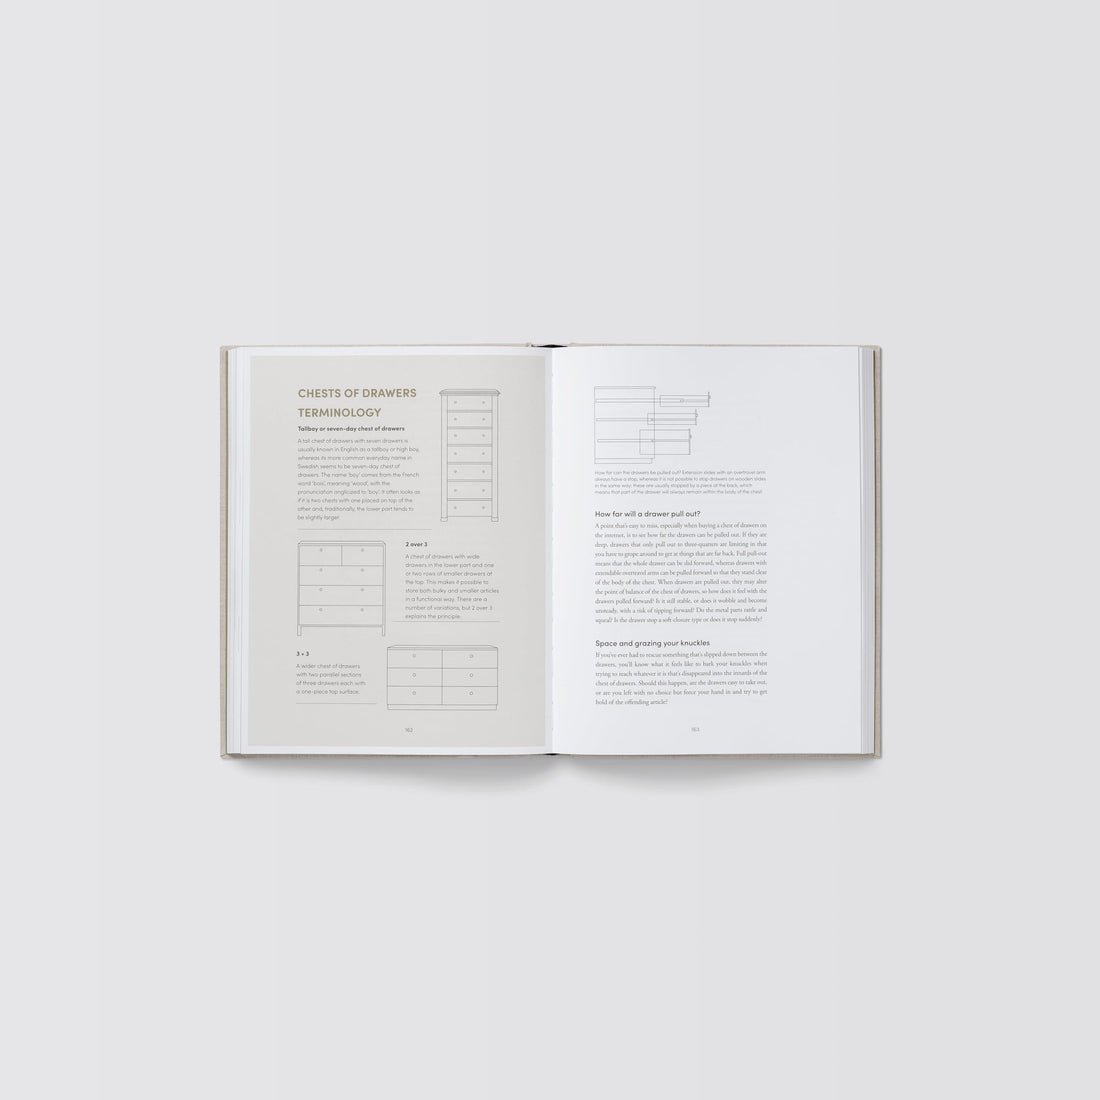 Furnishing Handbook, Frida Ramstedt